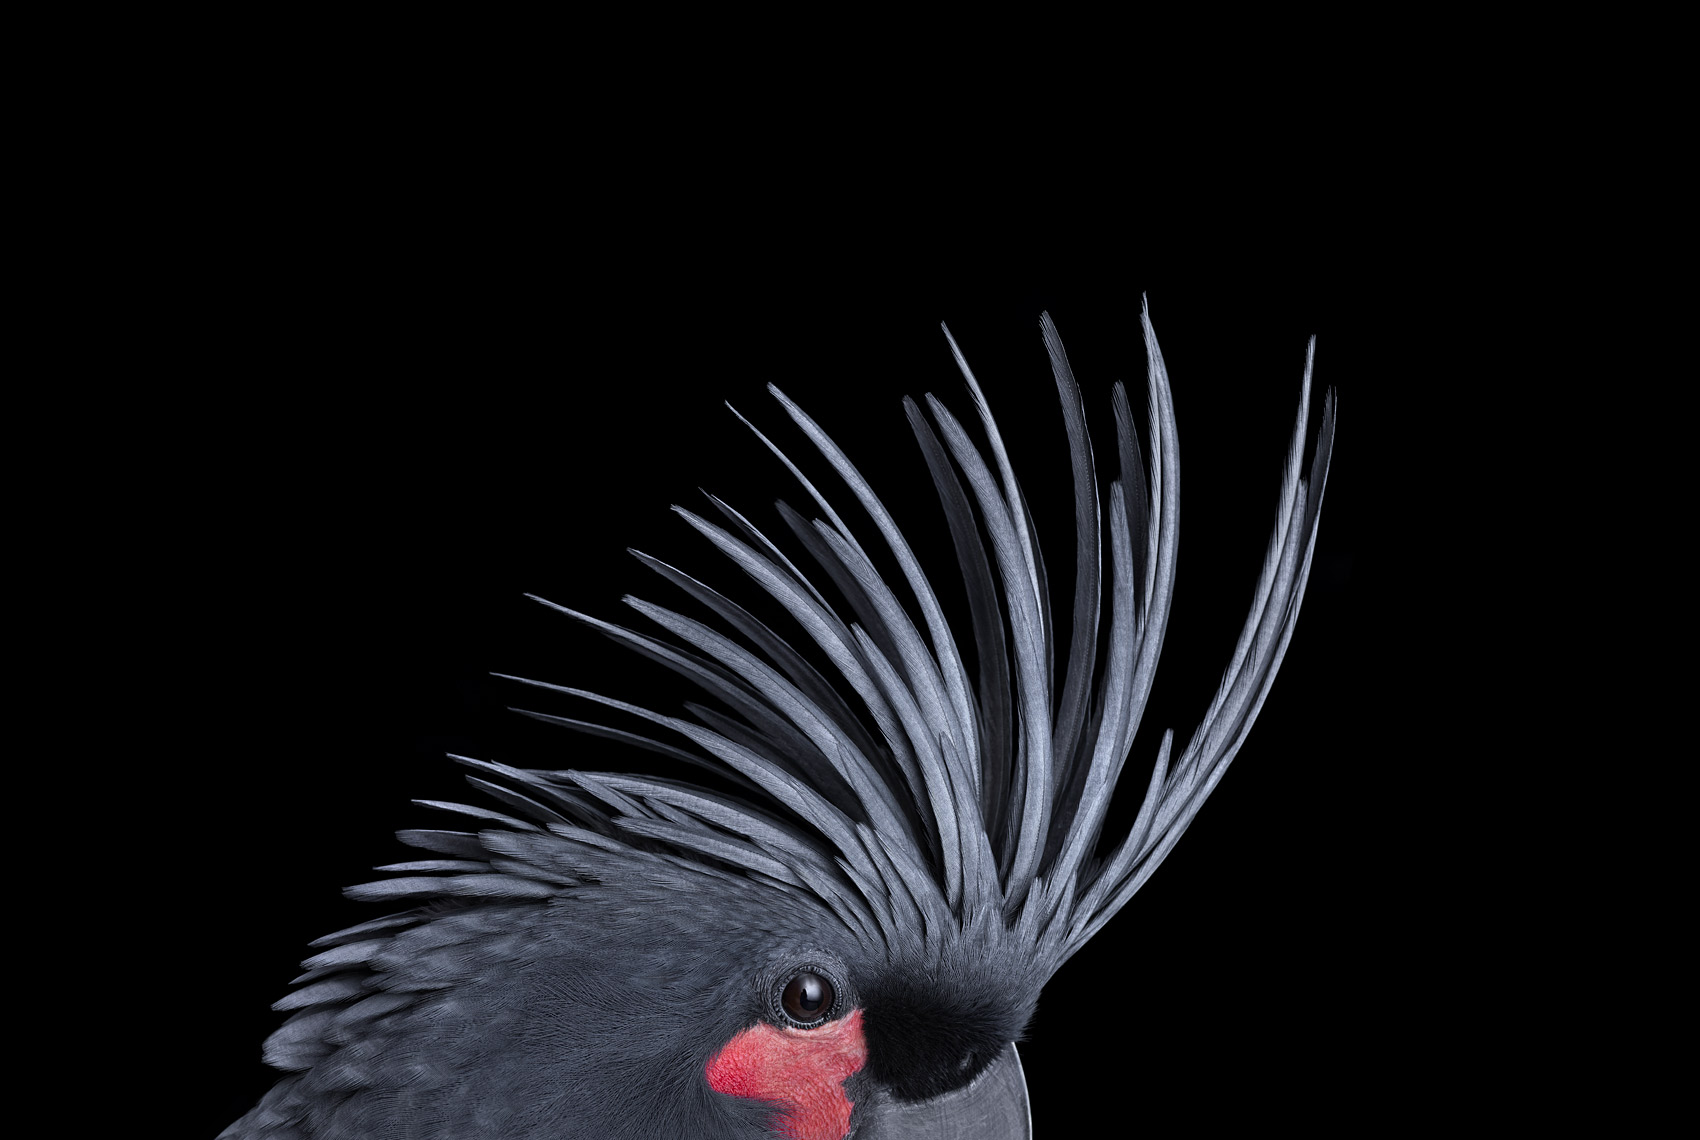 Palm cockatoo profile portrait by fine art animal photographer Brad Wilson